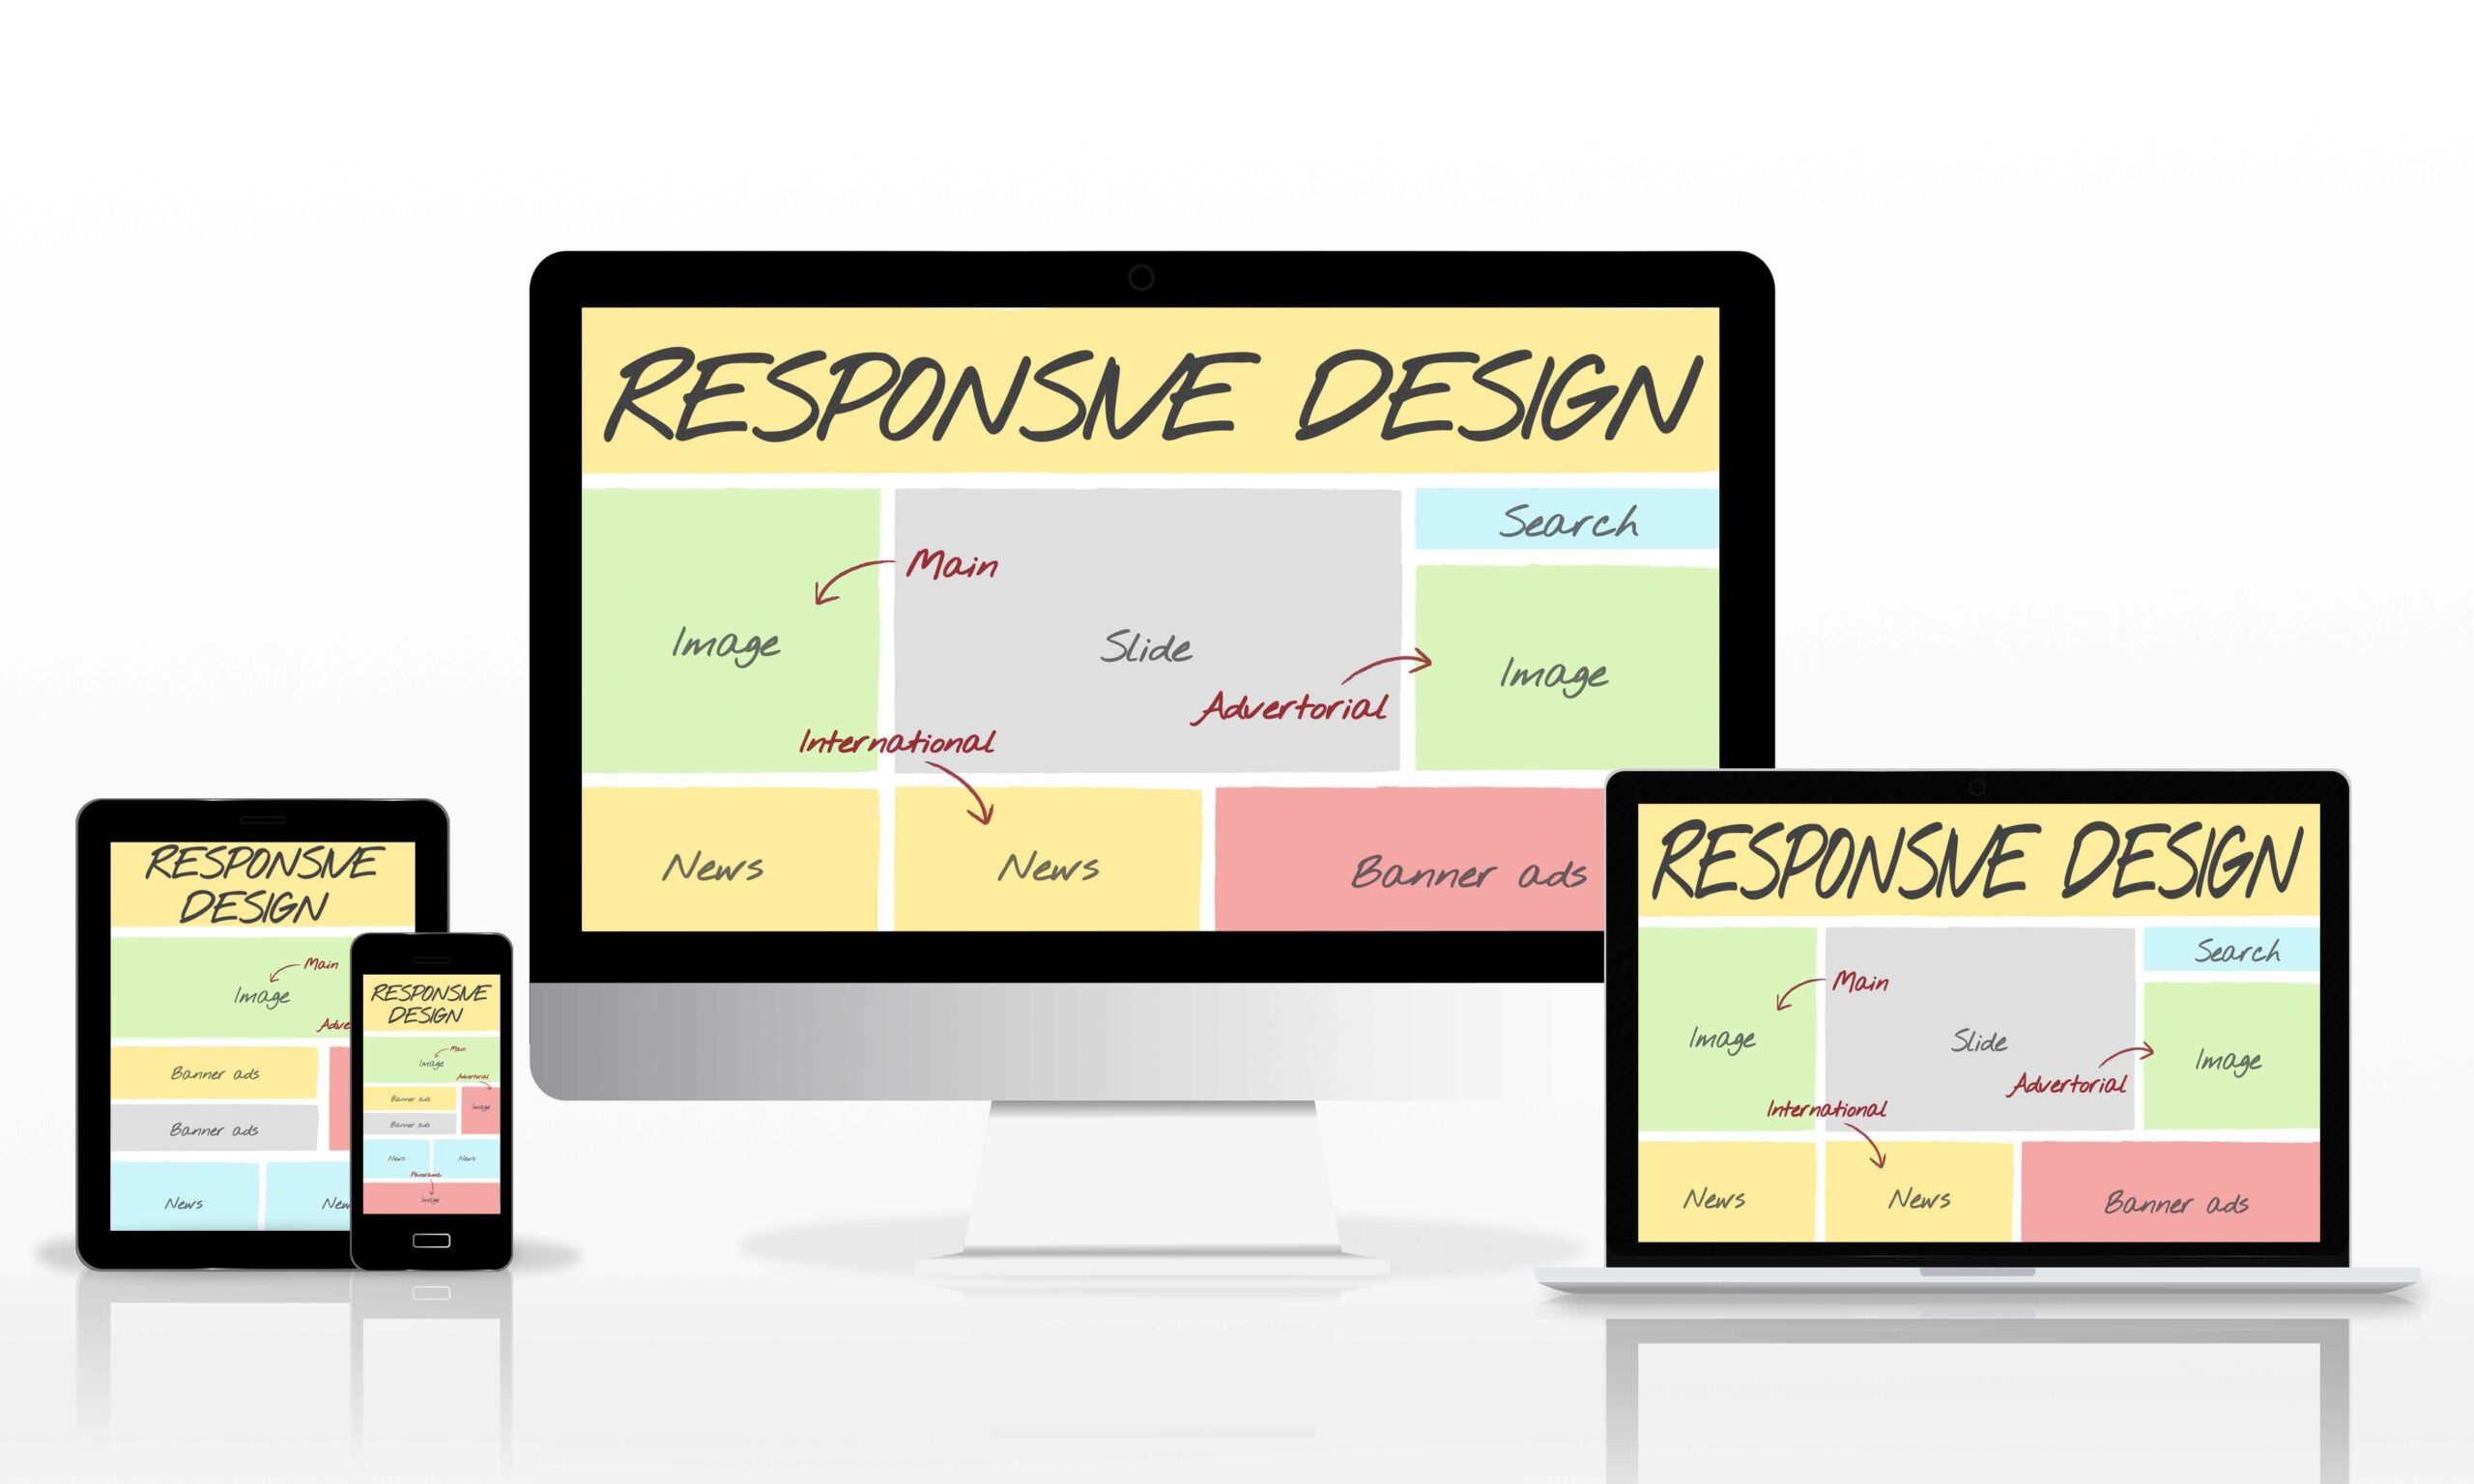 Use Responsive Design